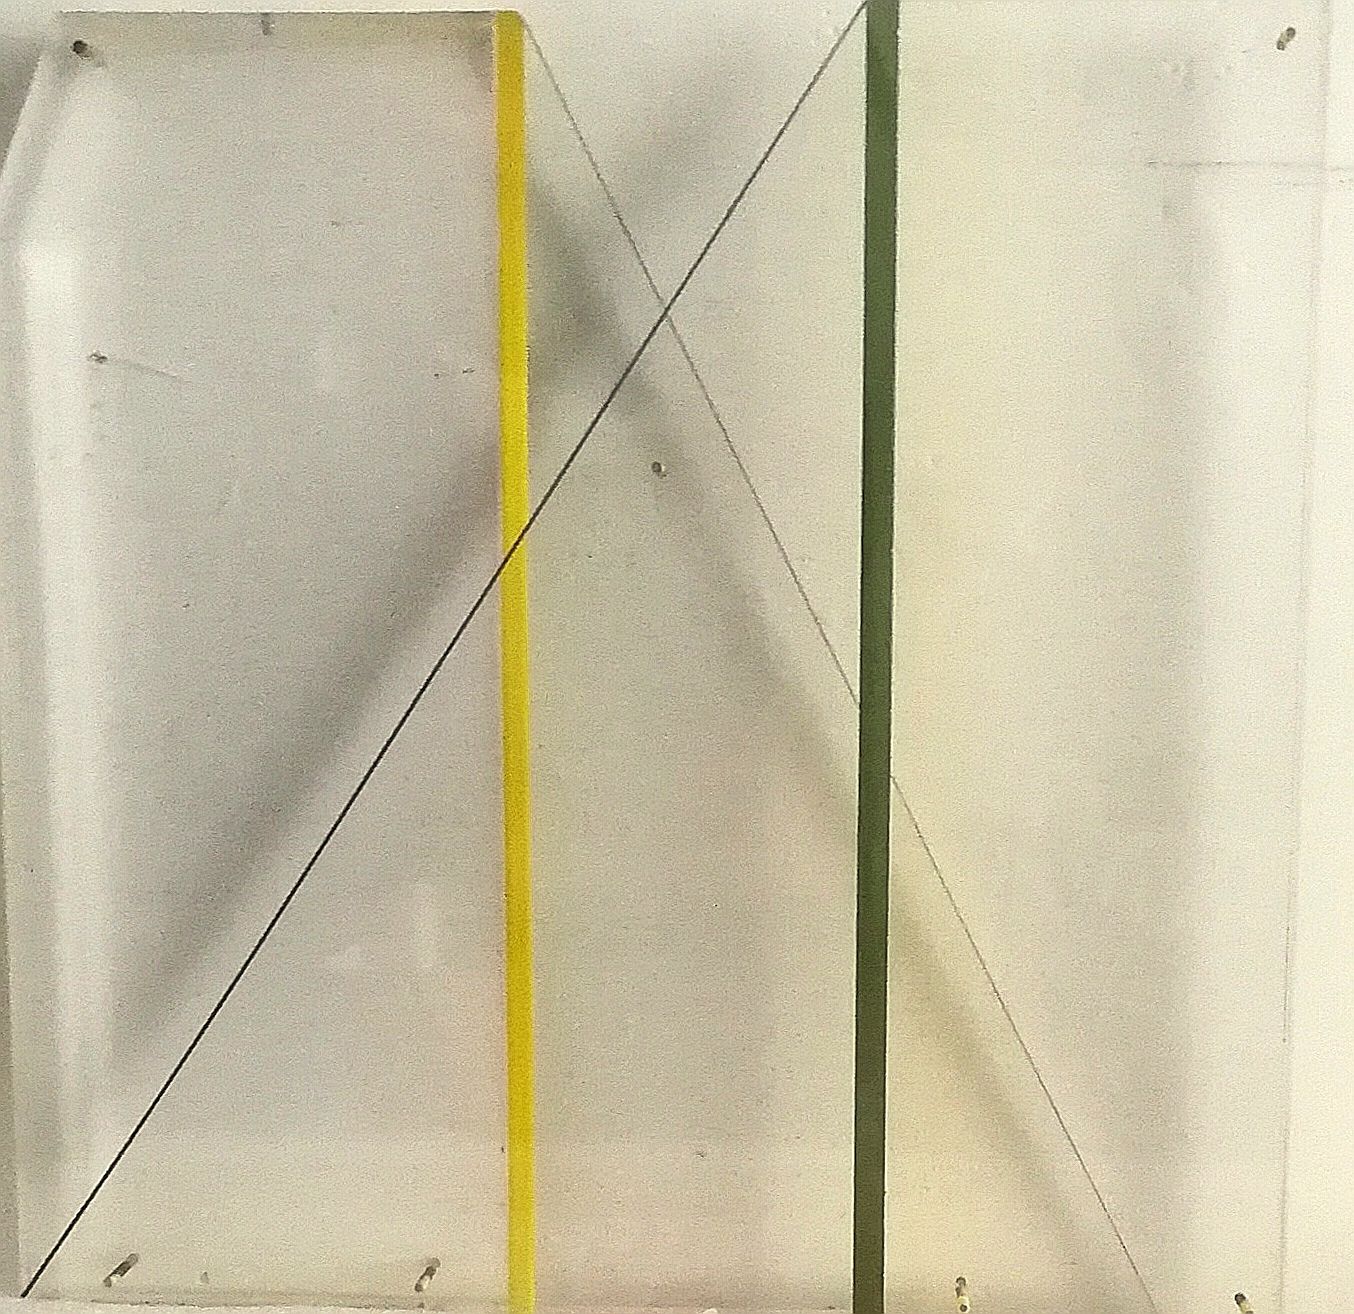 Daniel de Spirt Plexiglás diagonal Dimensiones: 36cm x 36cm Certificación: Etiqu&hellip;